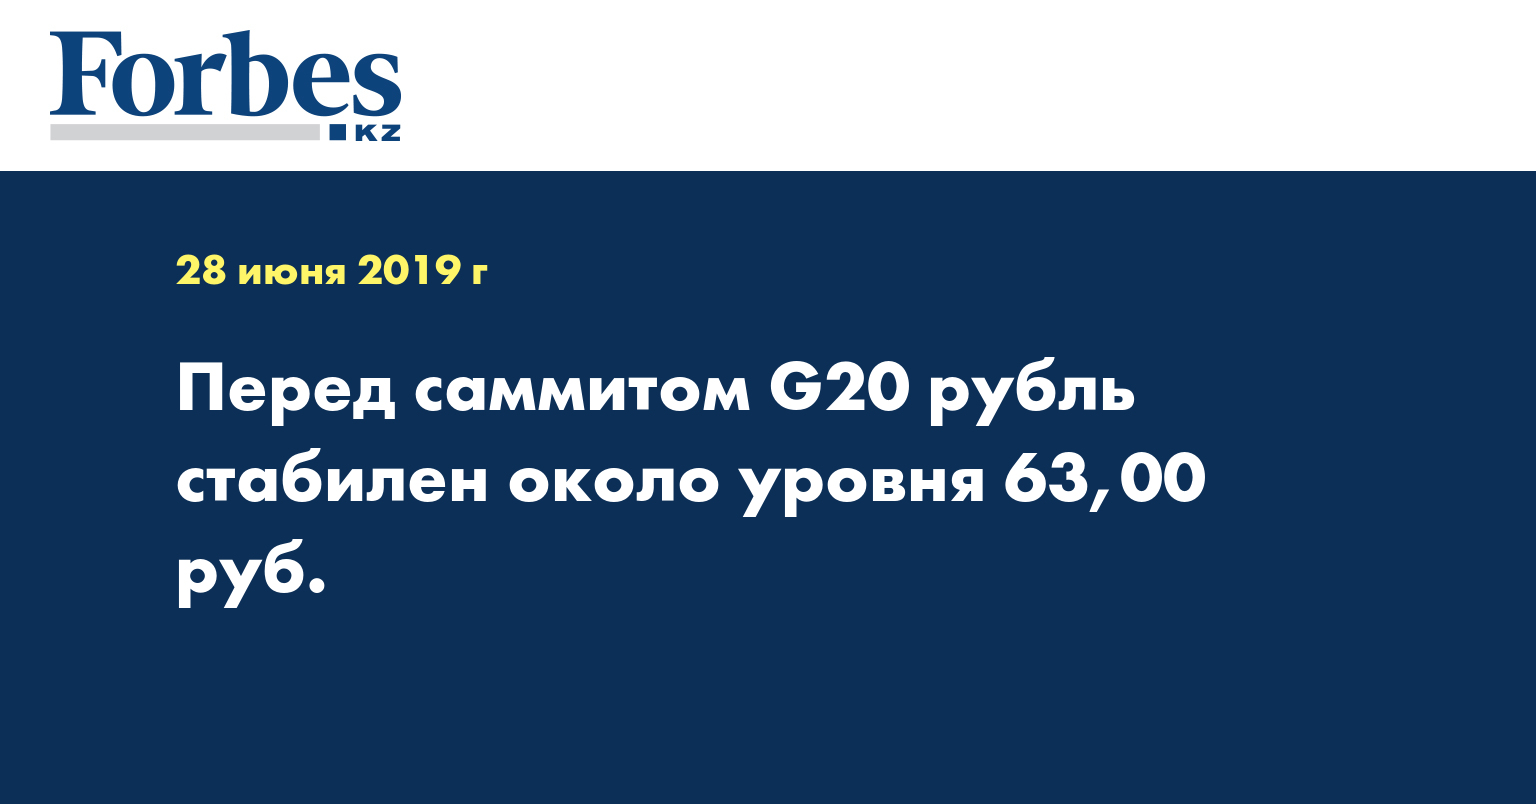 Перед саммитом G20 рубль стабилен около уровня 63,00 руб.